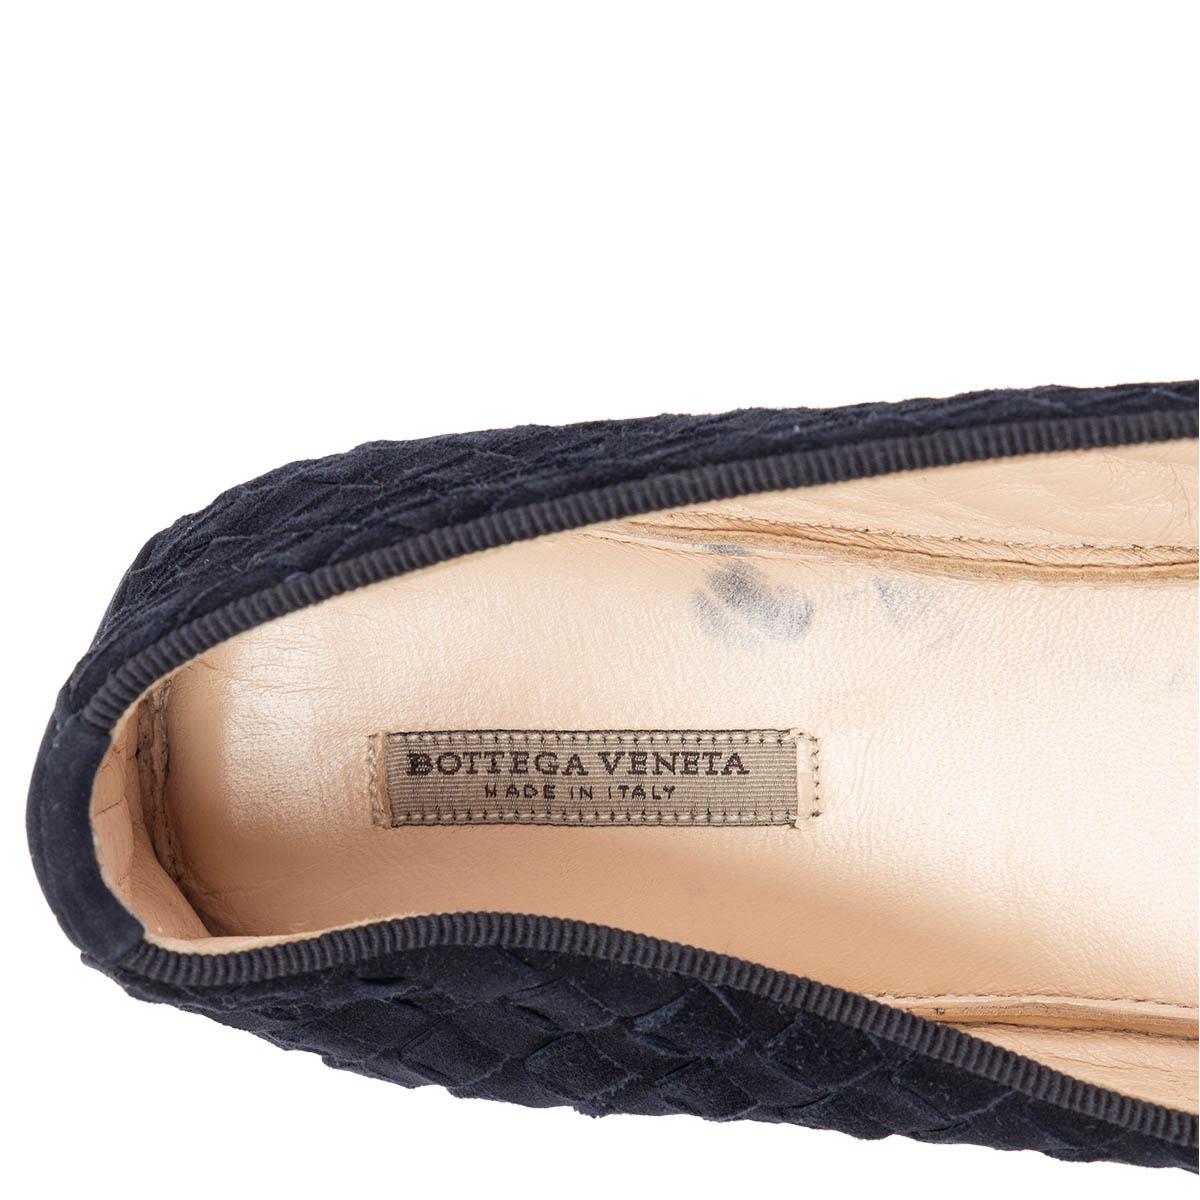 Black BOTTEGA VENETA midnight blue suede INTRECCIATO Flats Shoes 38.5 For Sale